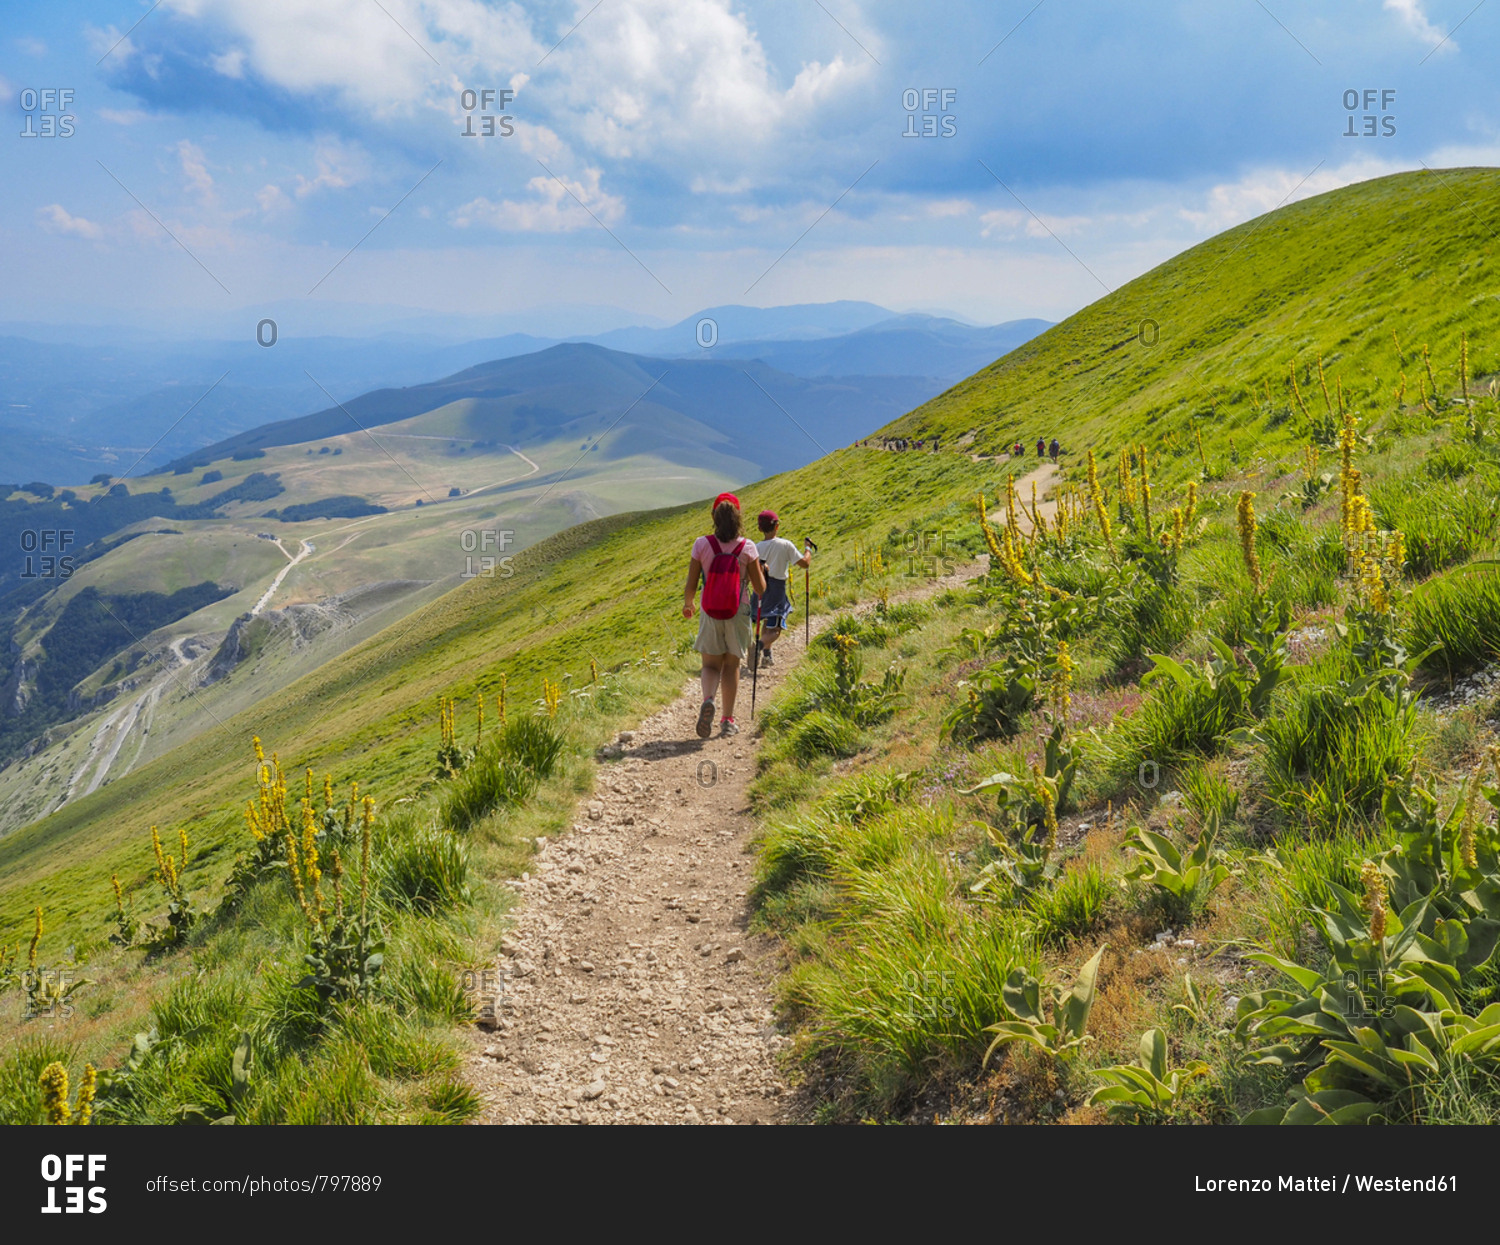 Italy- Umbria- Sibillini mountains- two children hiking mount Vettore